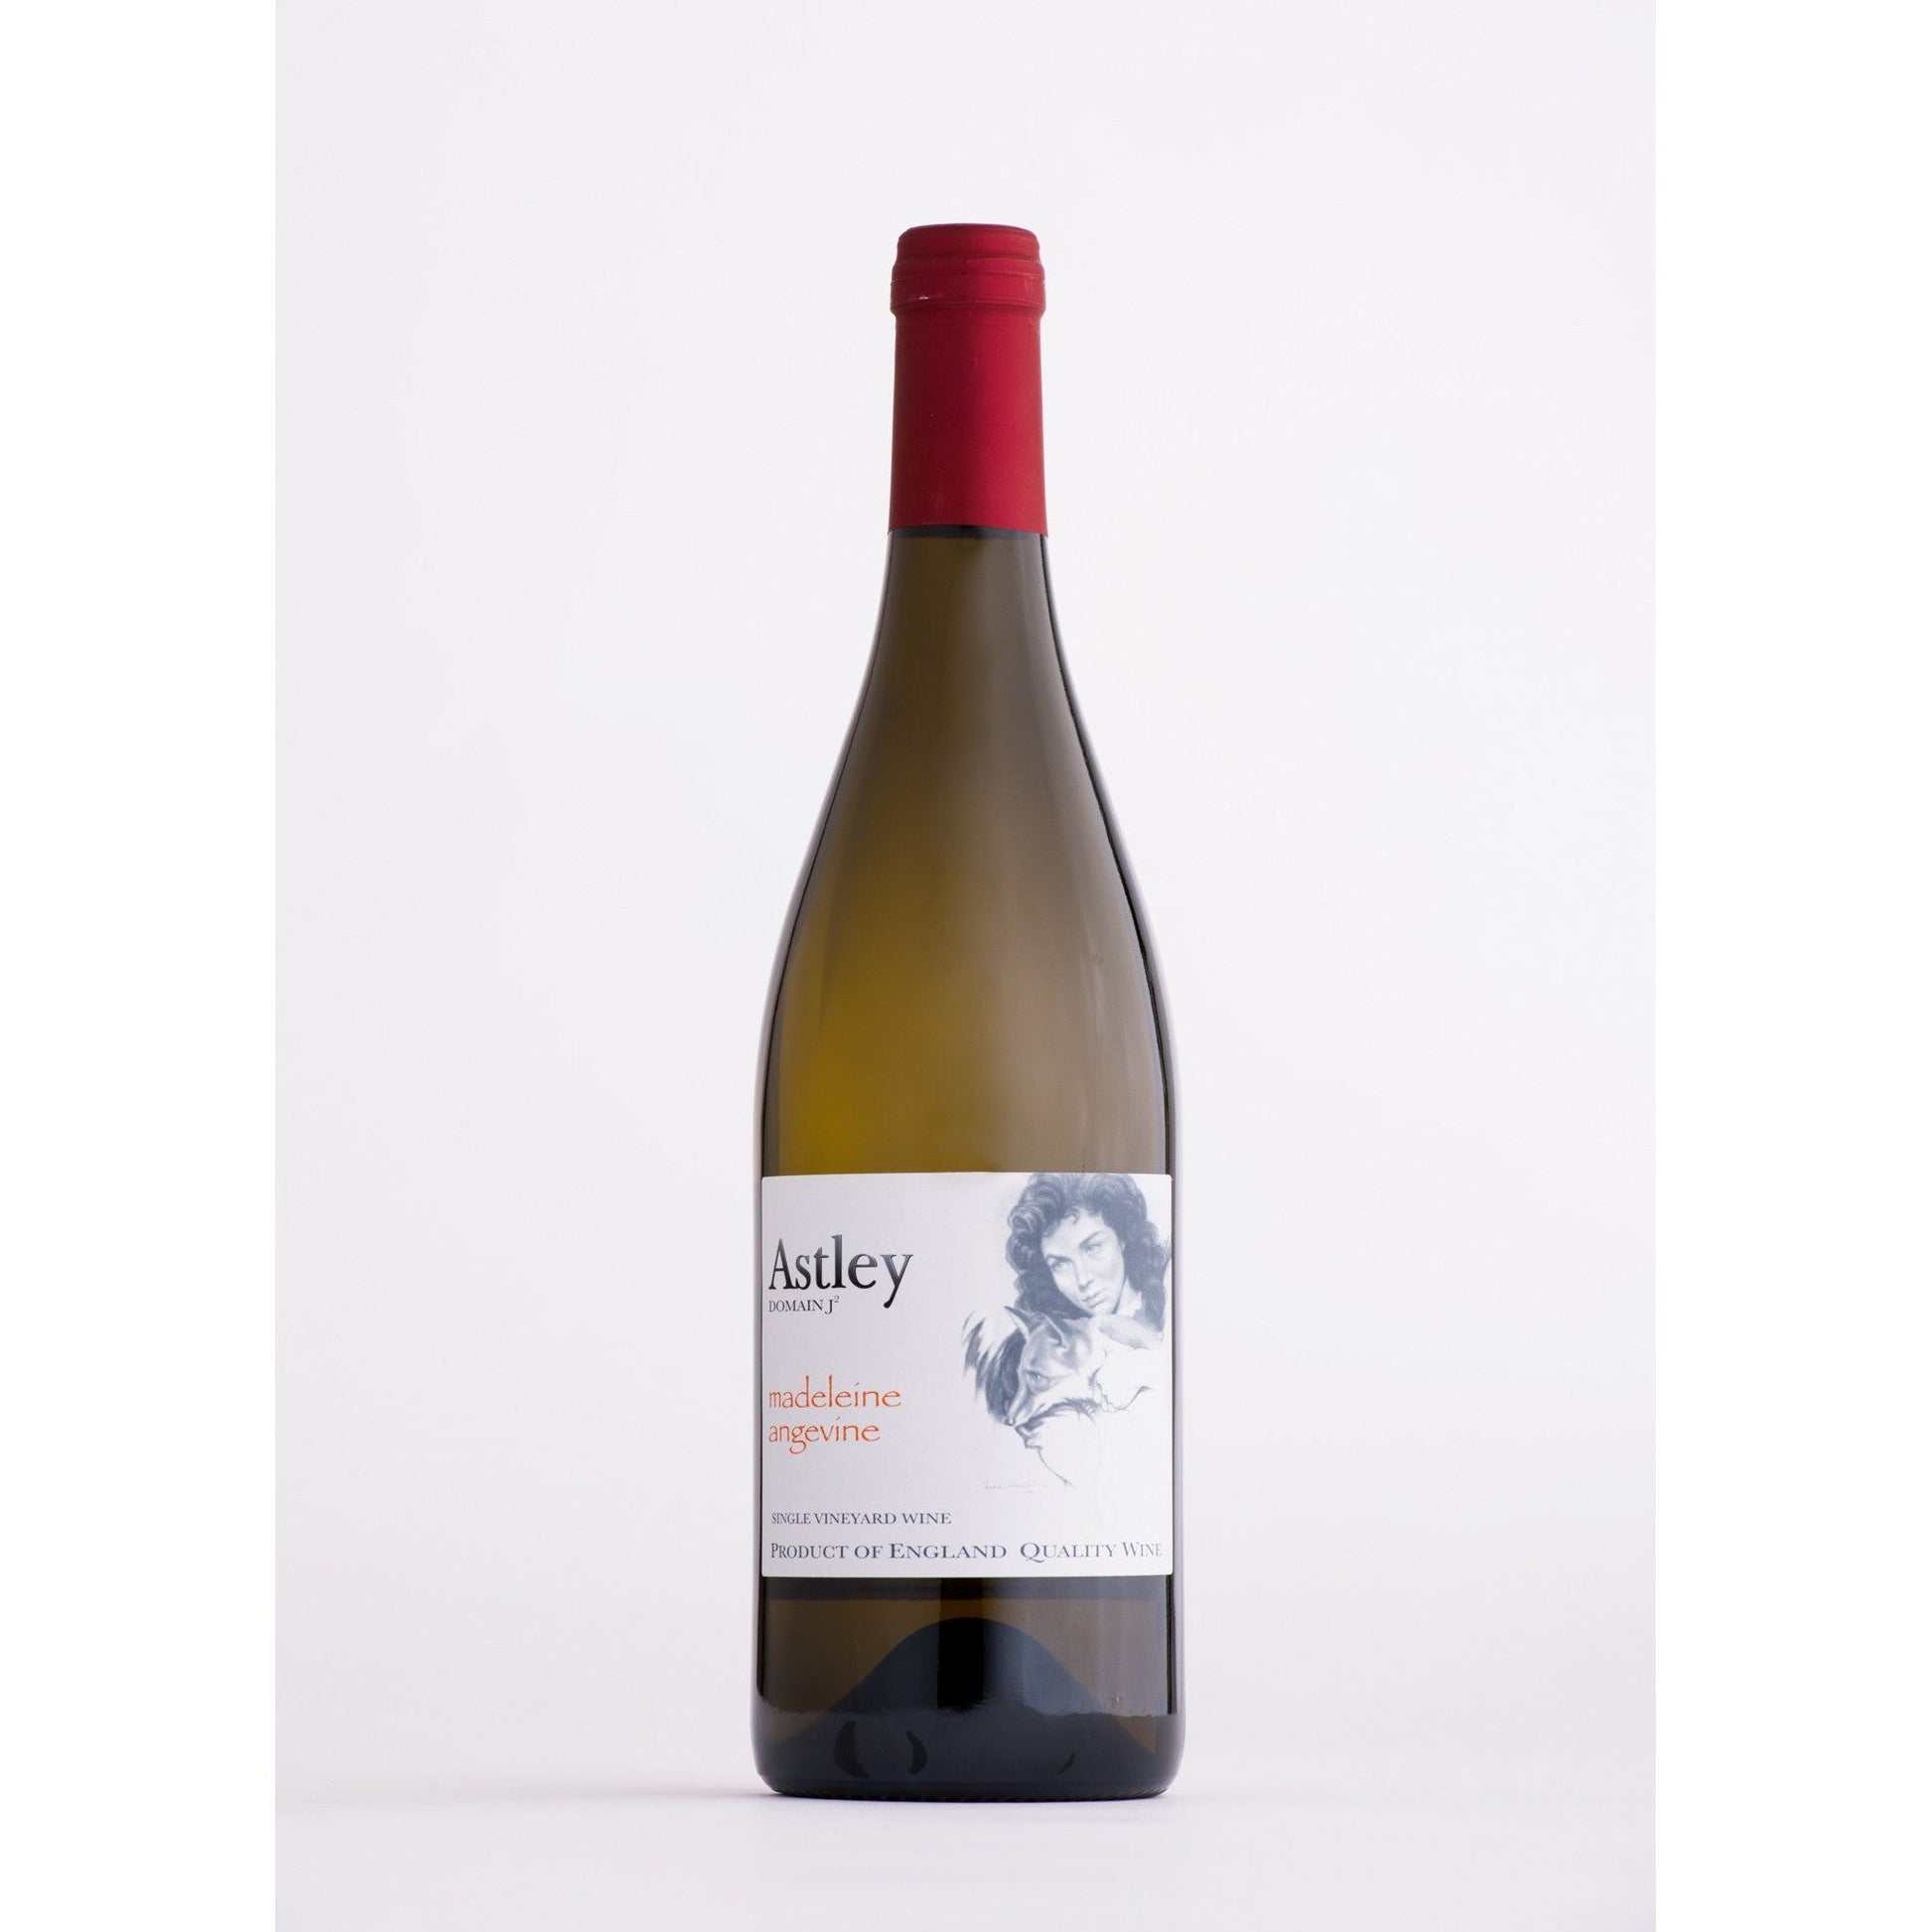 Astley Madeleine Angevine White wine The English Wine Collection